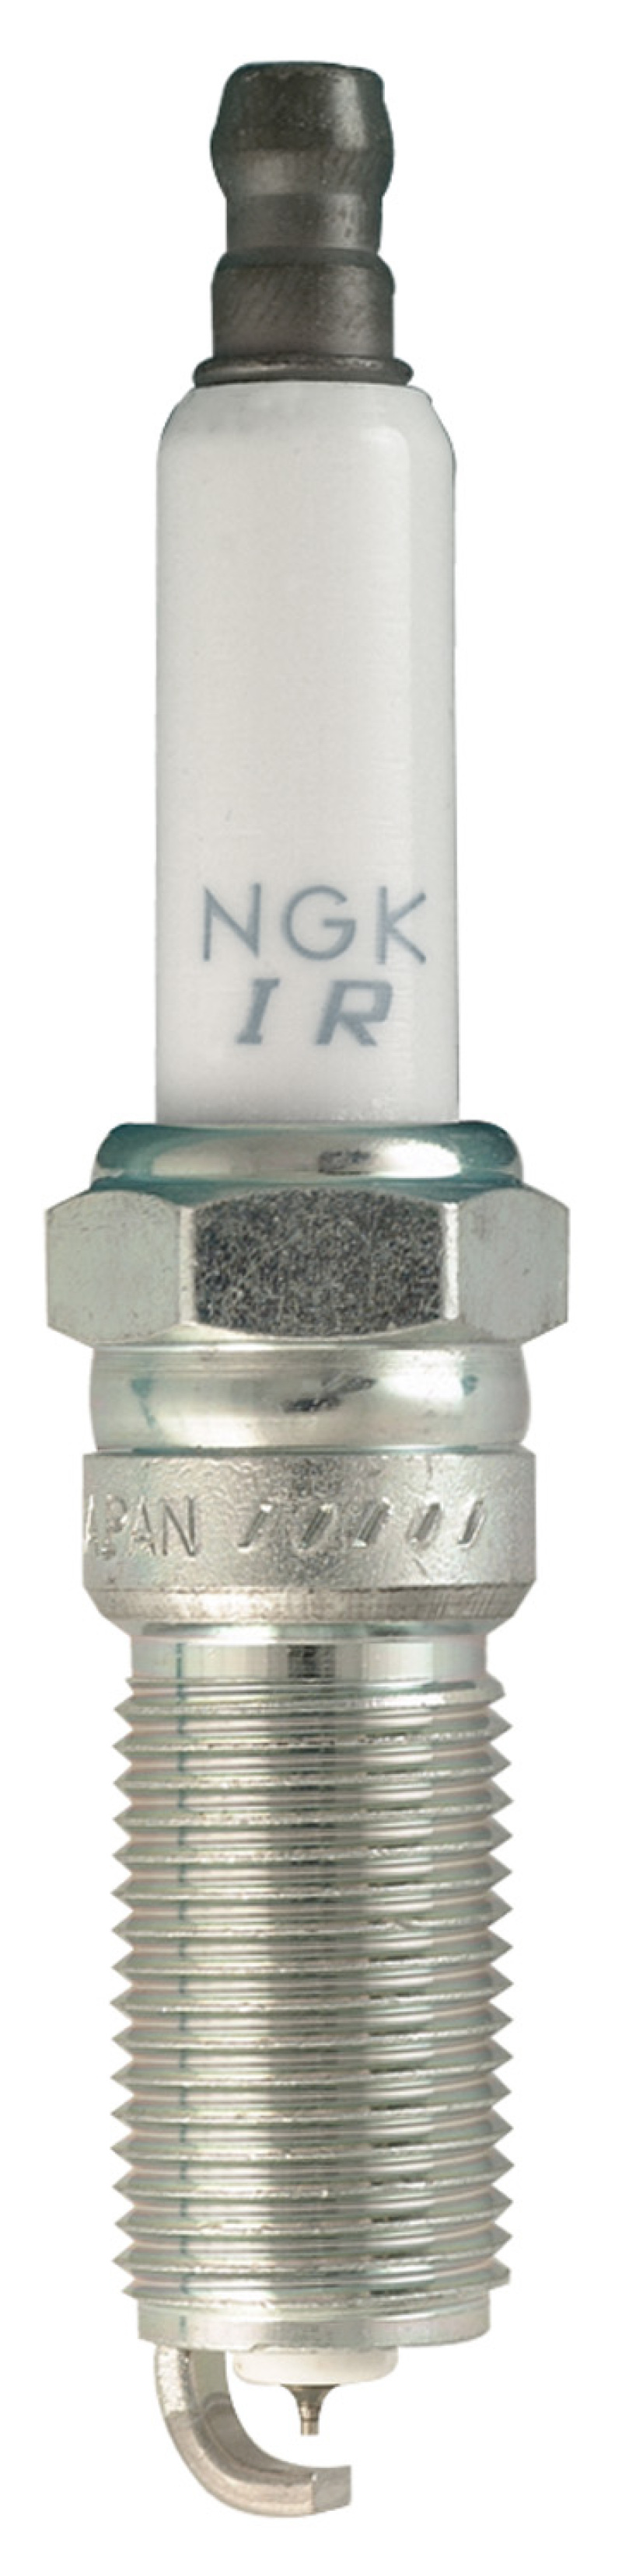 NGK Iridium/Platinum Spark Plug Box of 4 (ILTR5E11) - 91418